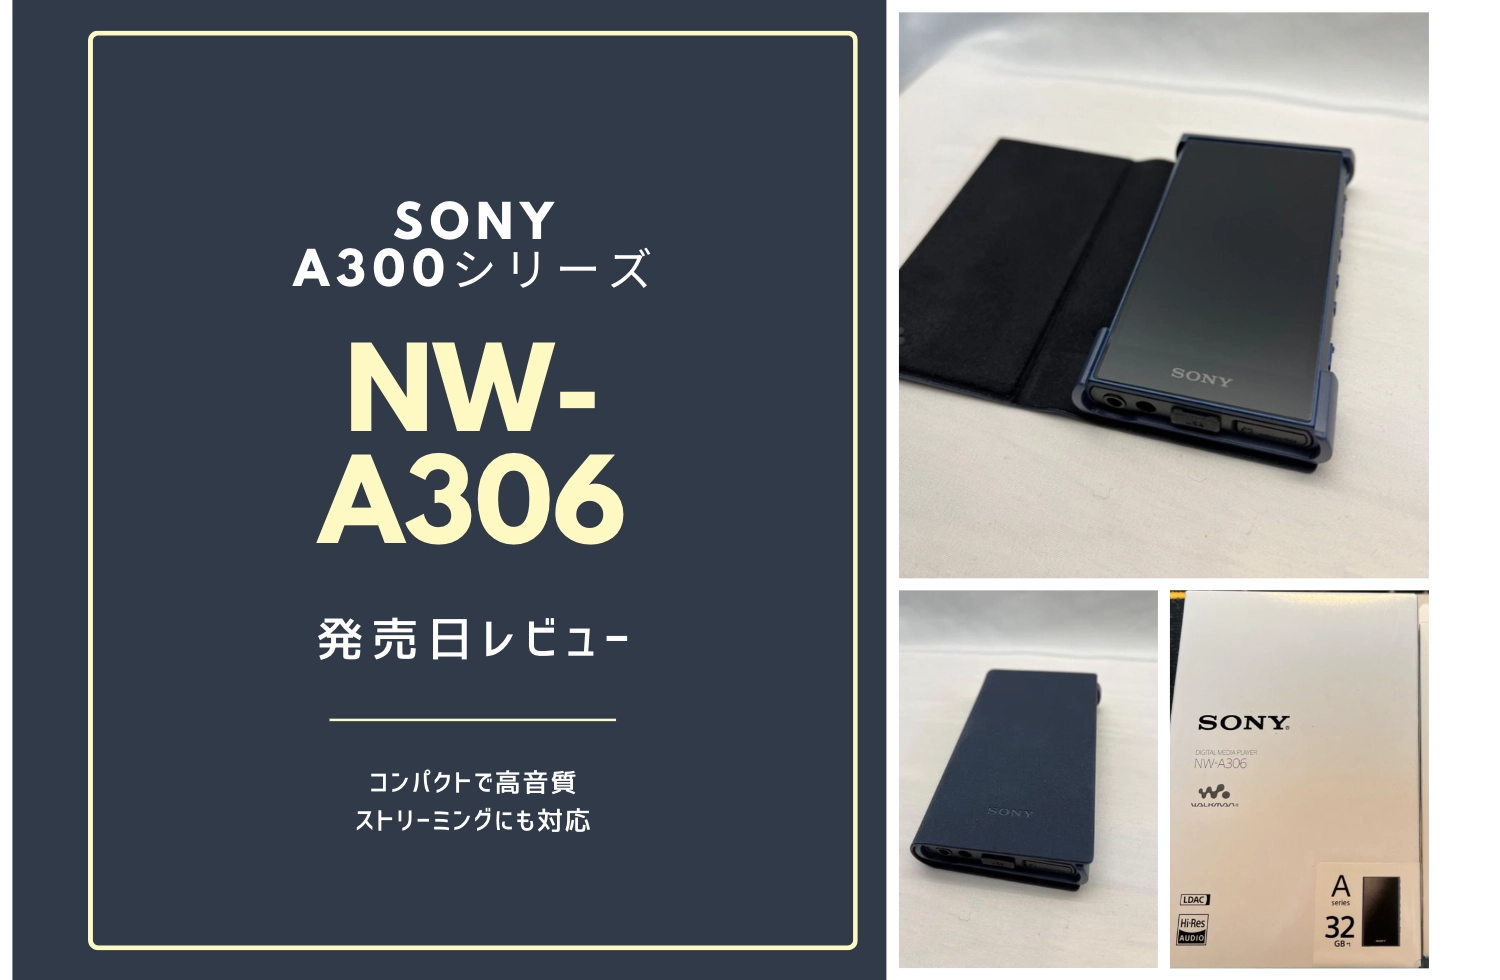 SONY NW-A300シリーズ NW-A306 発売日レビュー *今後も更新予定